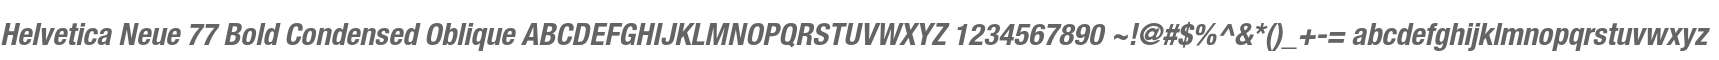 Helvetica Neue 77 Bold Condensed Oblique